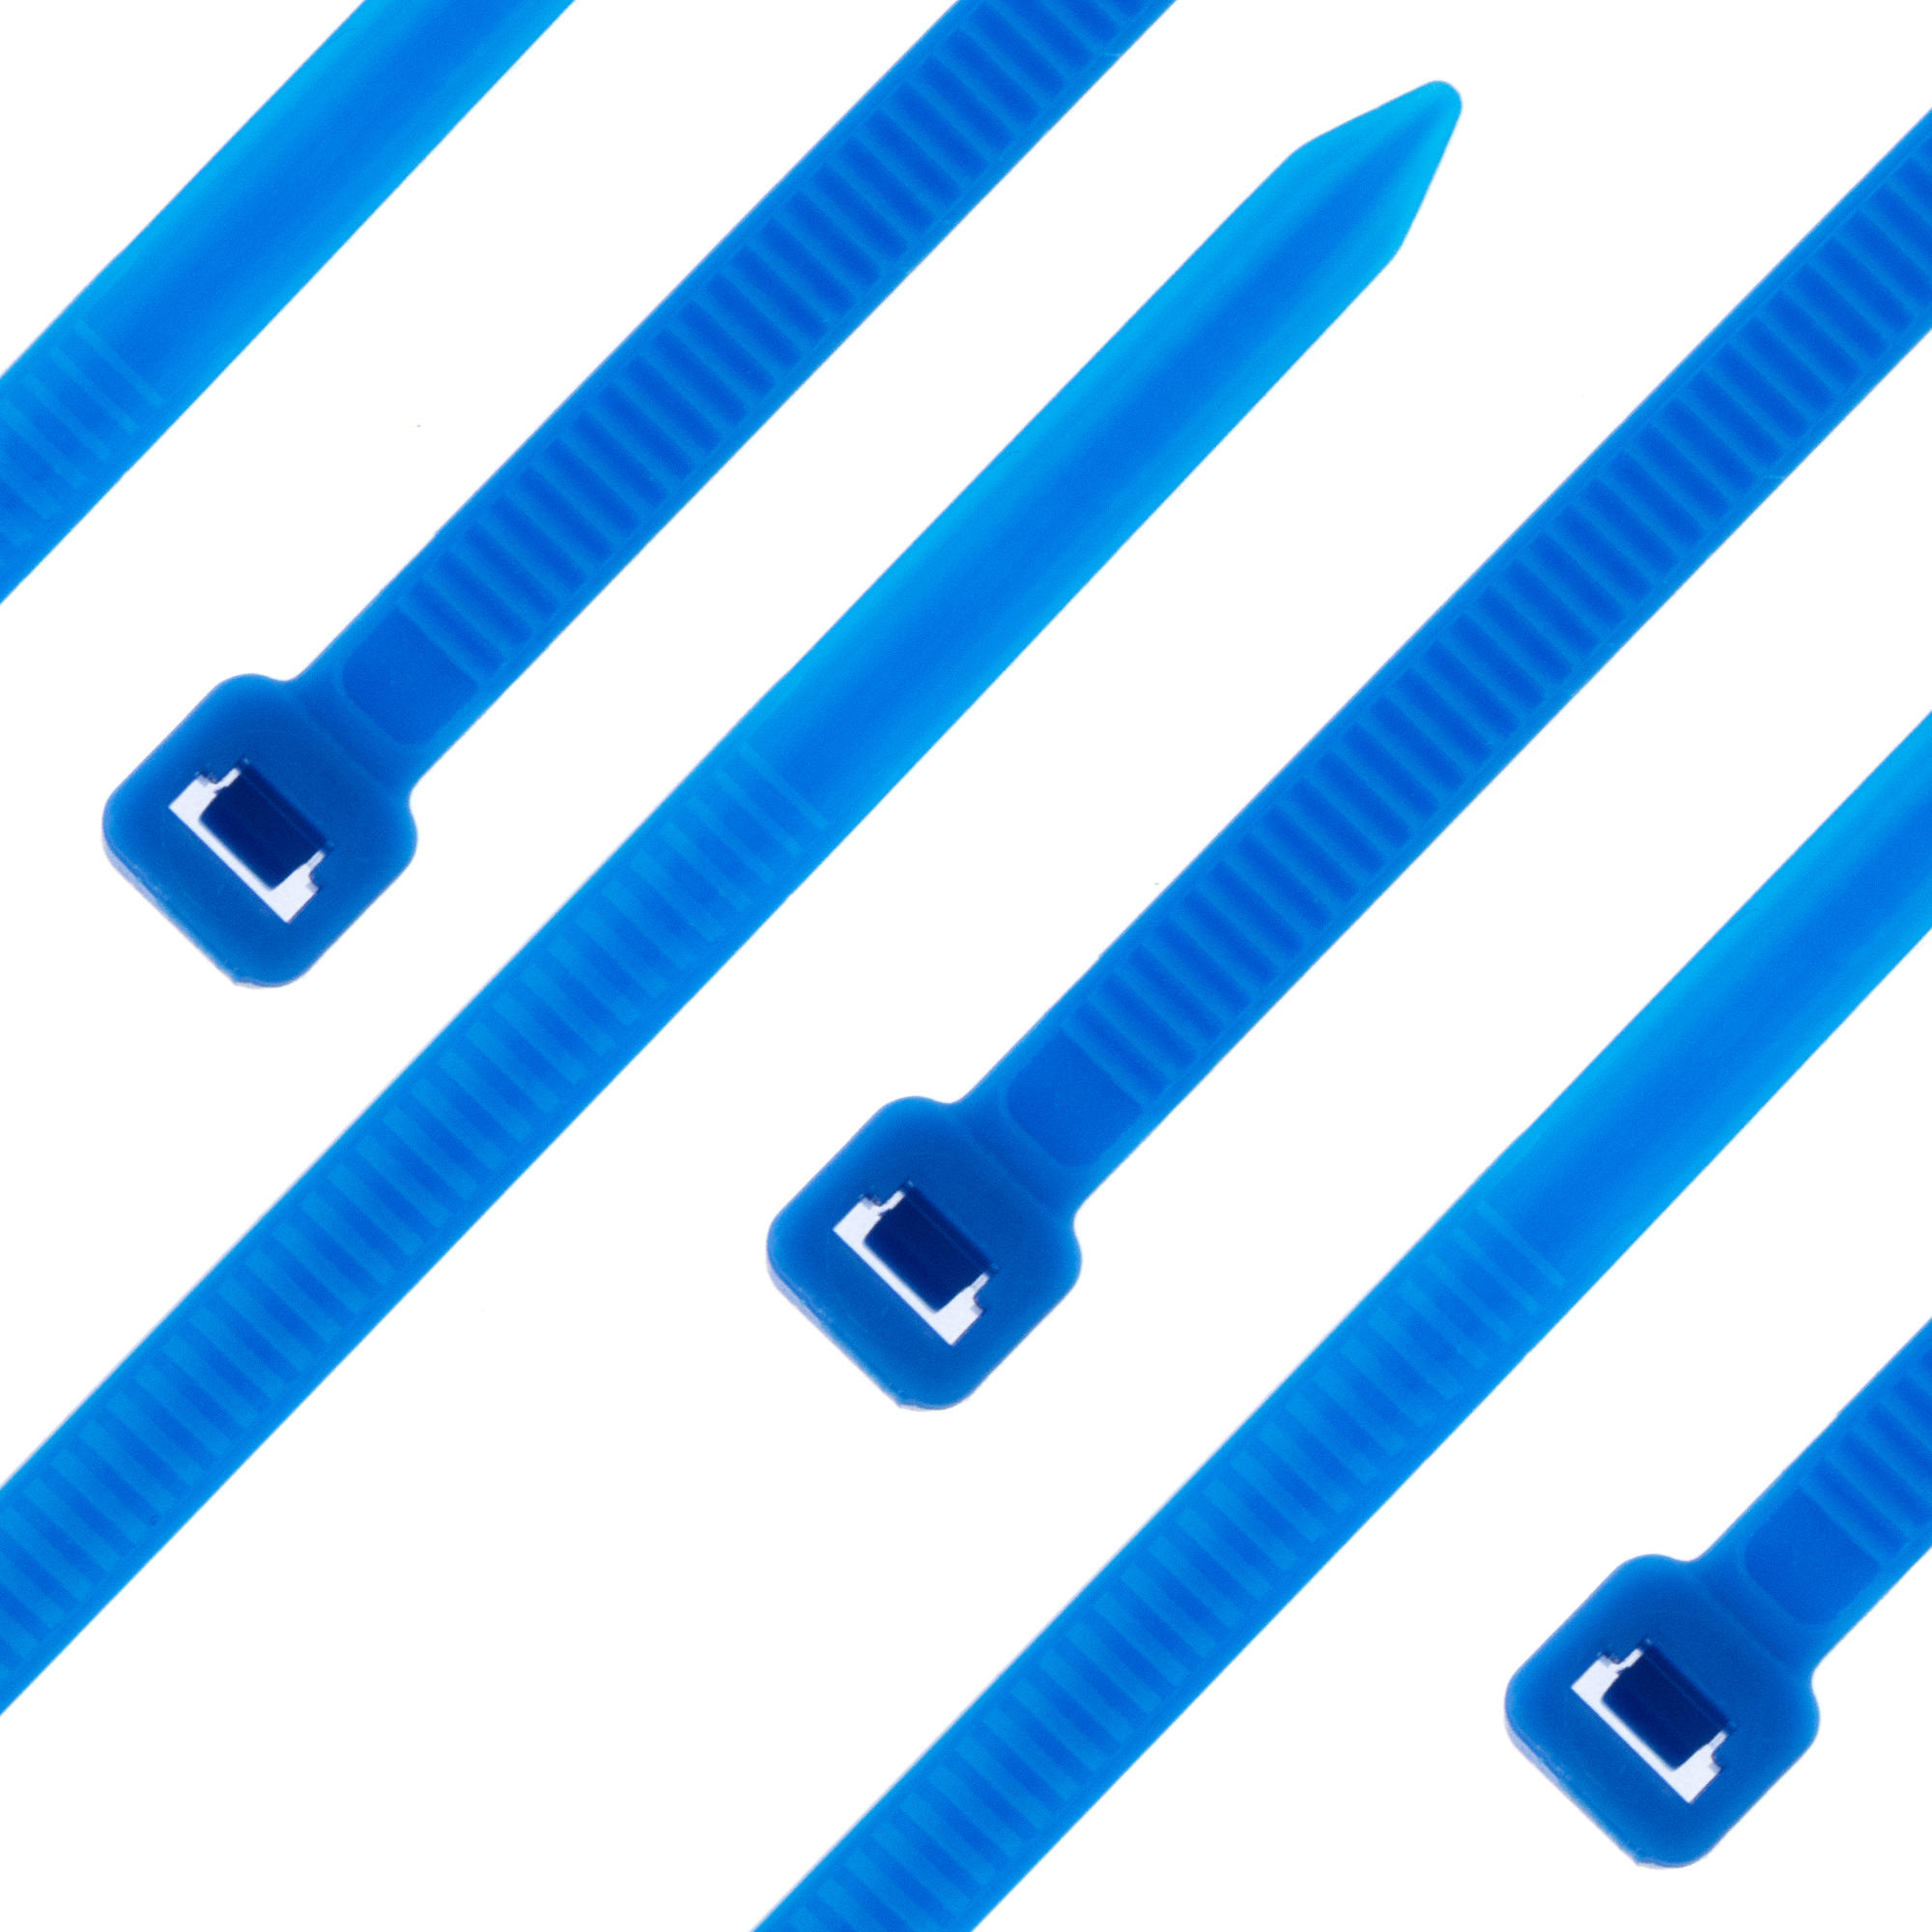 Cable tie self-locking 300 x 4,8mm, blue, 100PCS